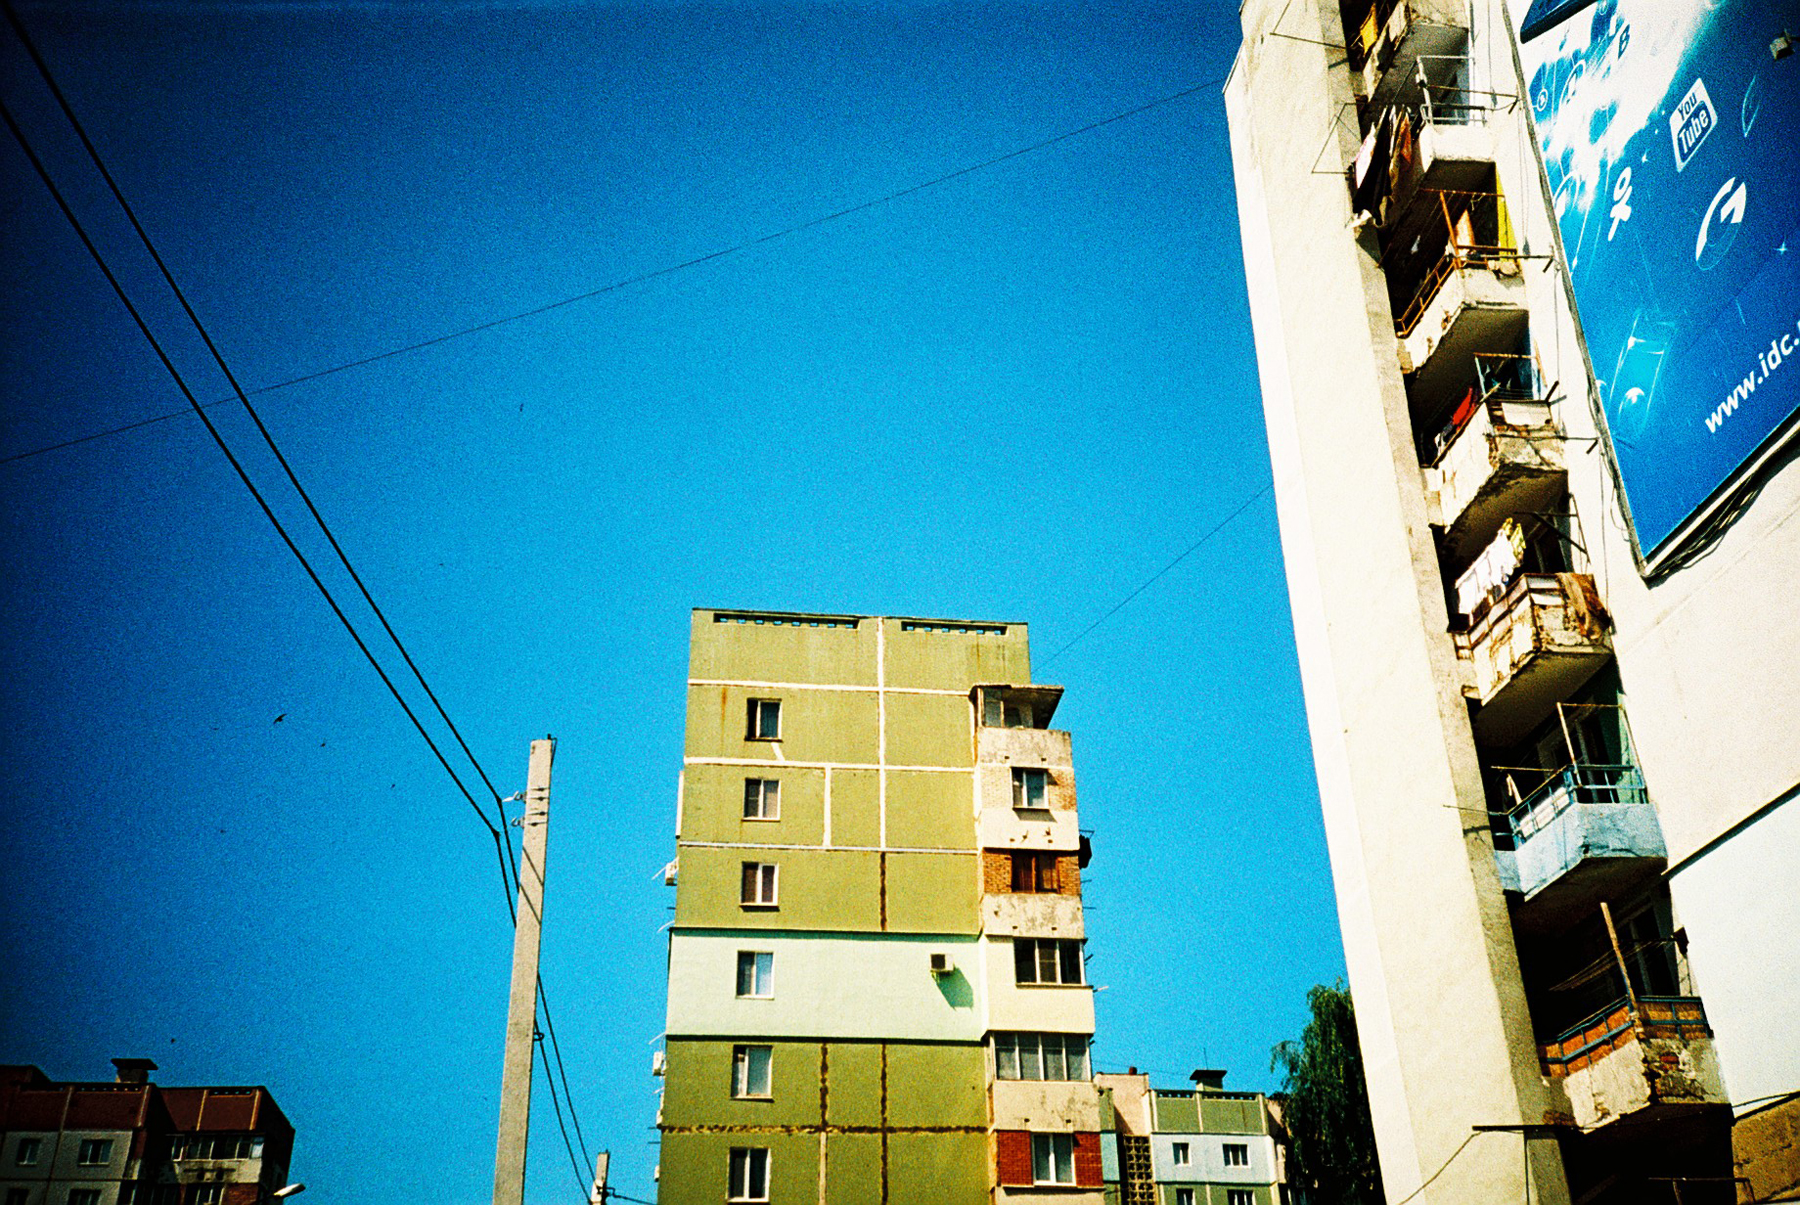 Soviet apartment block (Pic: Stephen Dowling)